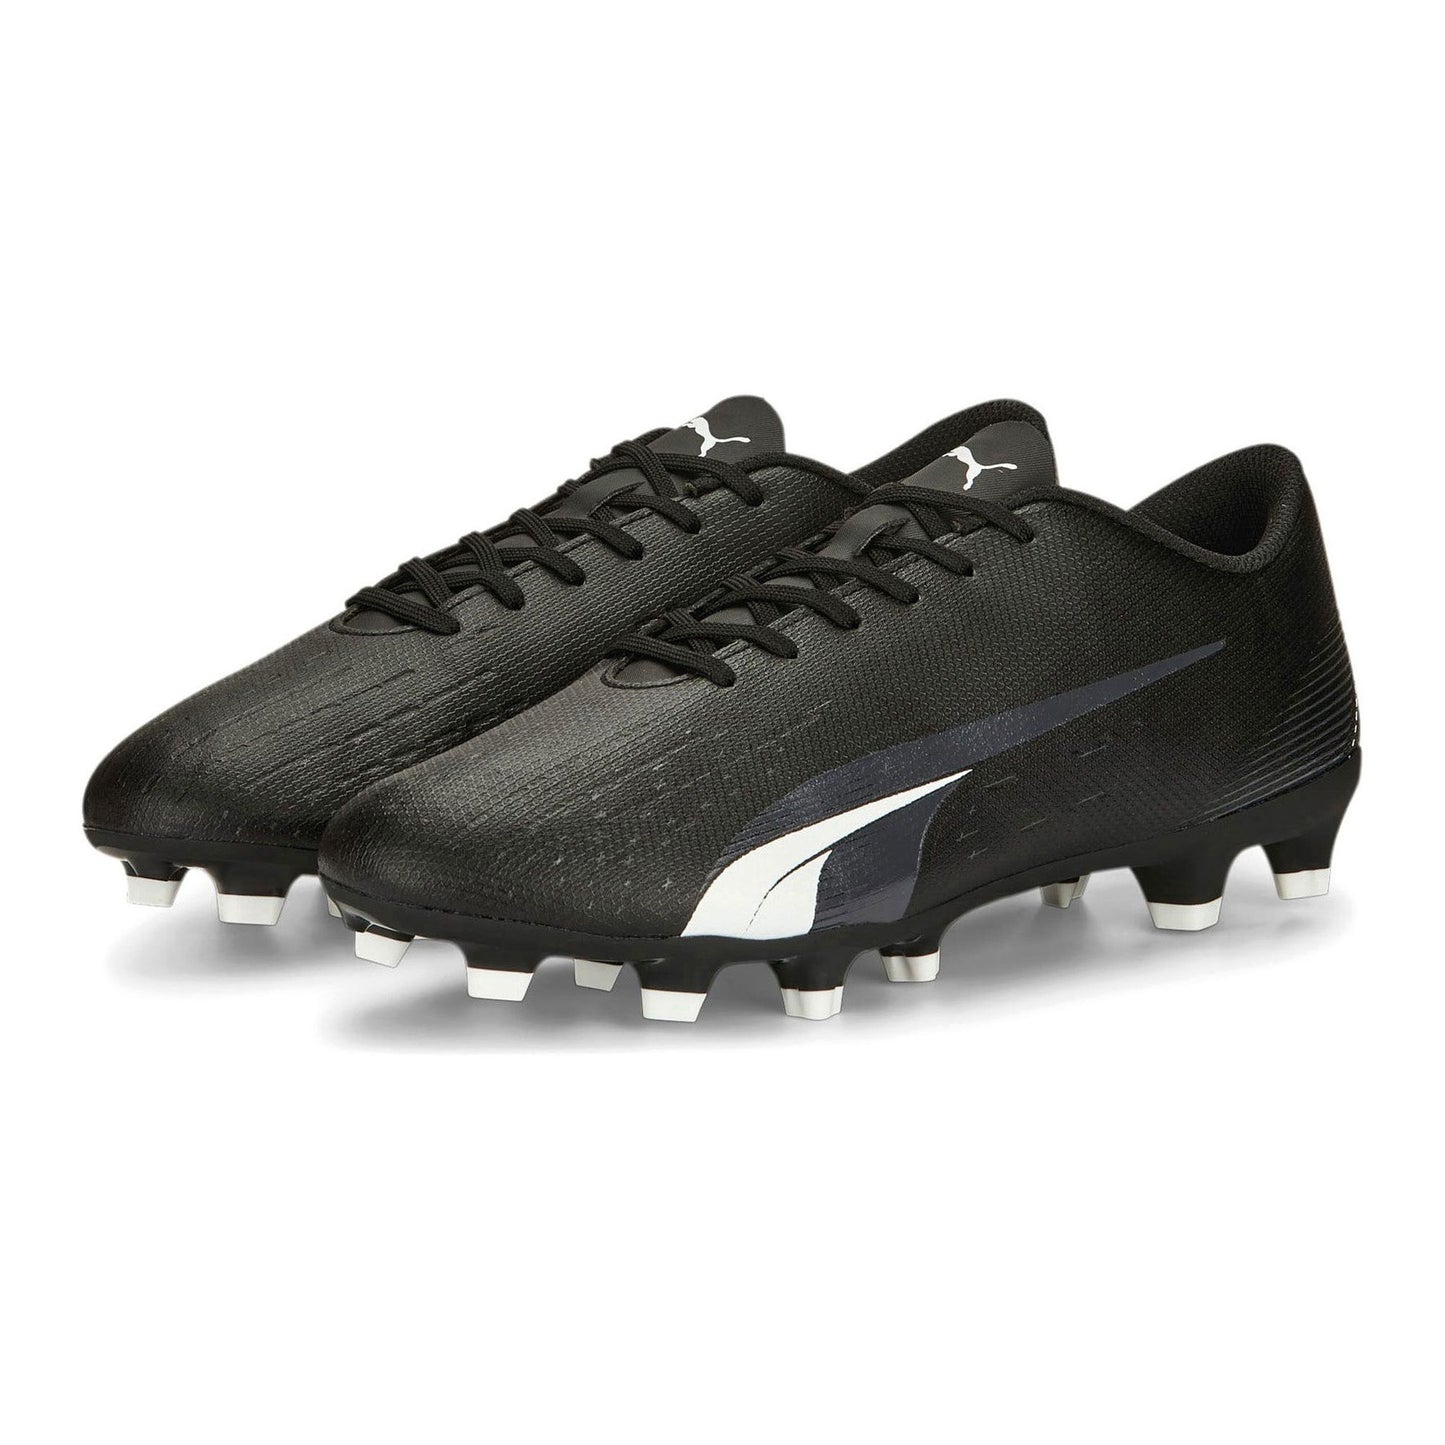 Puma ULTRA PLAY FG/AG Men's Football Boots Black/White - (107224 02) - PU2 - R2L17